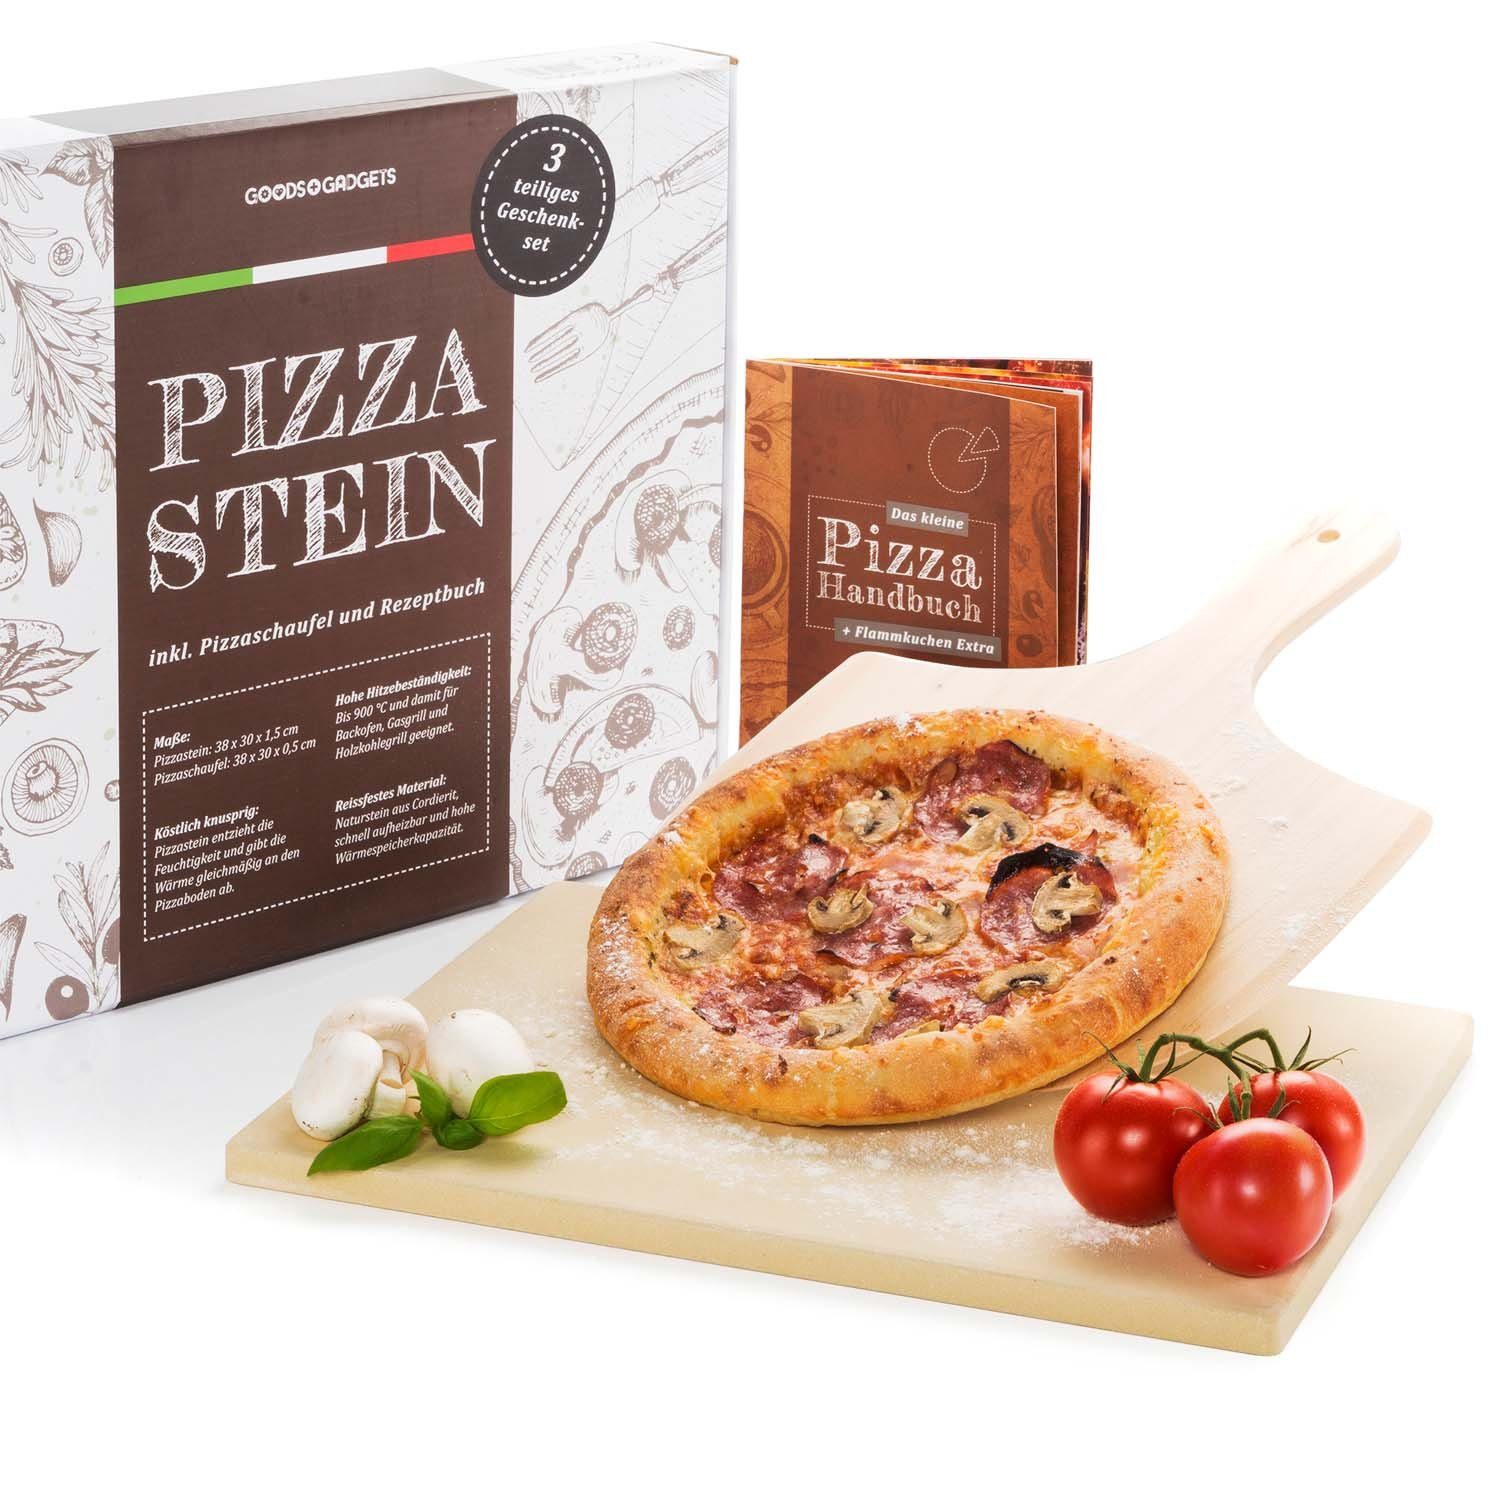 Dimono Pizzastein Backstein Brotbackstein, (Pizzaofen Set, Pizzaschieber & Rezeptbuch), temperaturbeständig bis 900°C Backstein, Pizzaschieber Handbuch